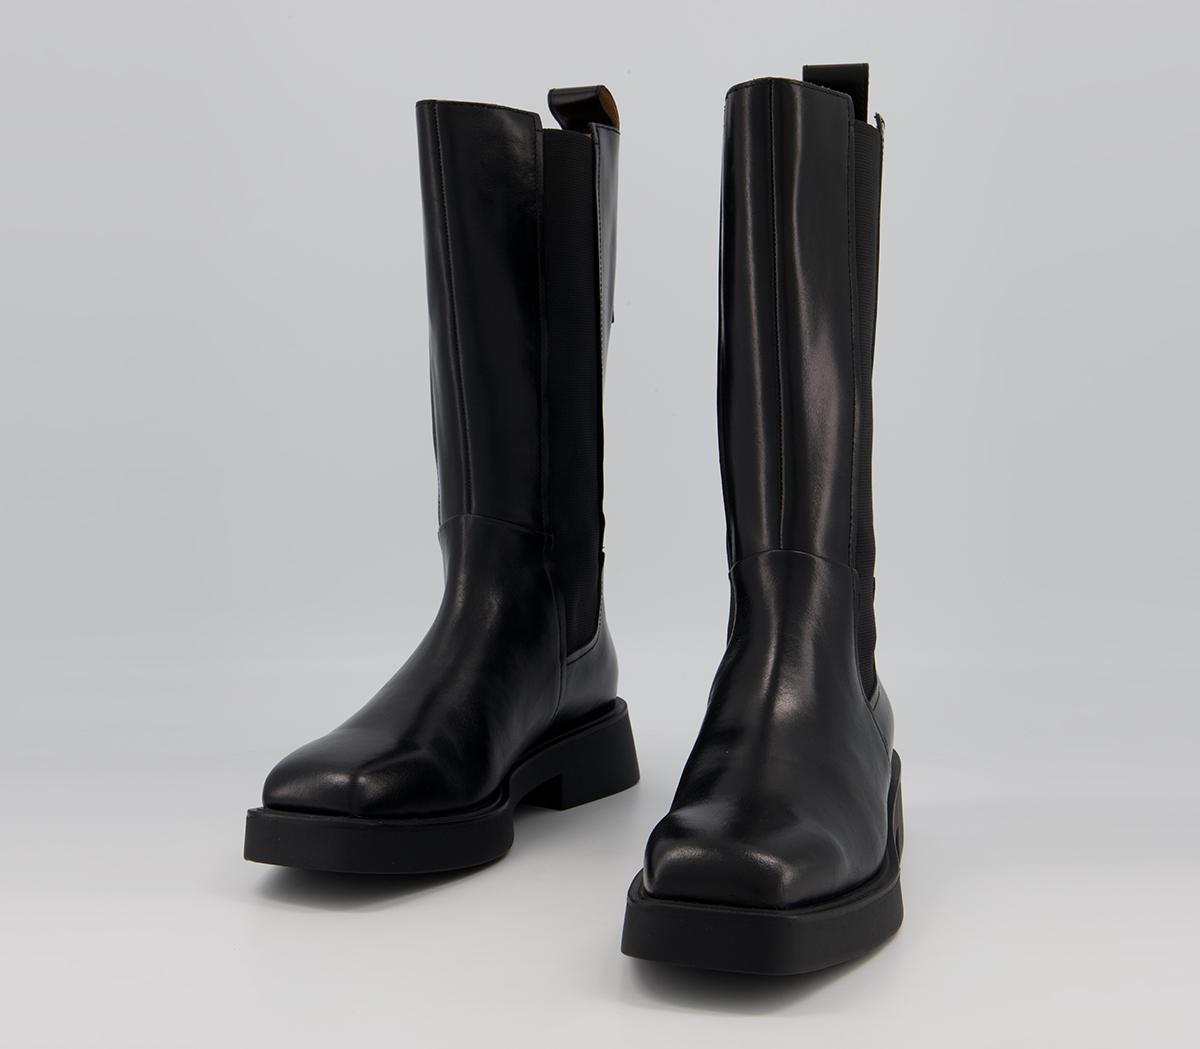 Atelier by Vagabond Carmen Tall Boots Black - Women's Boots